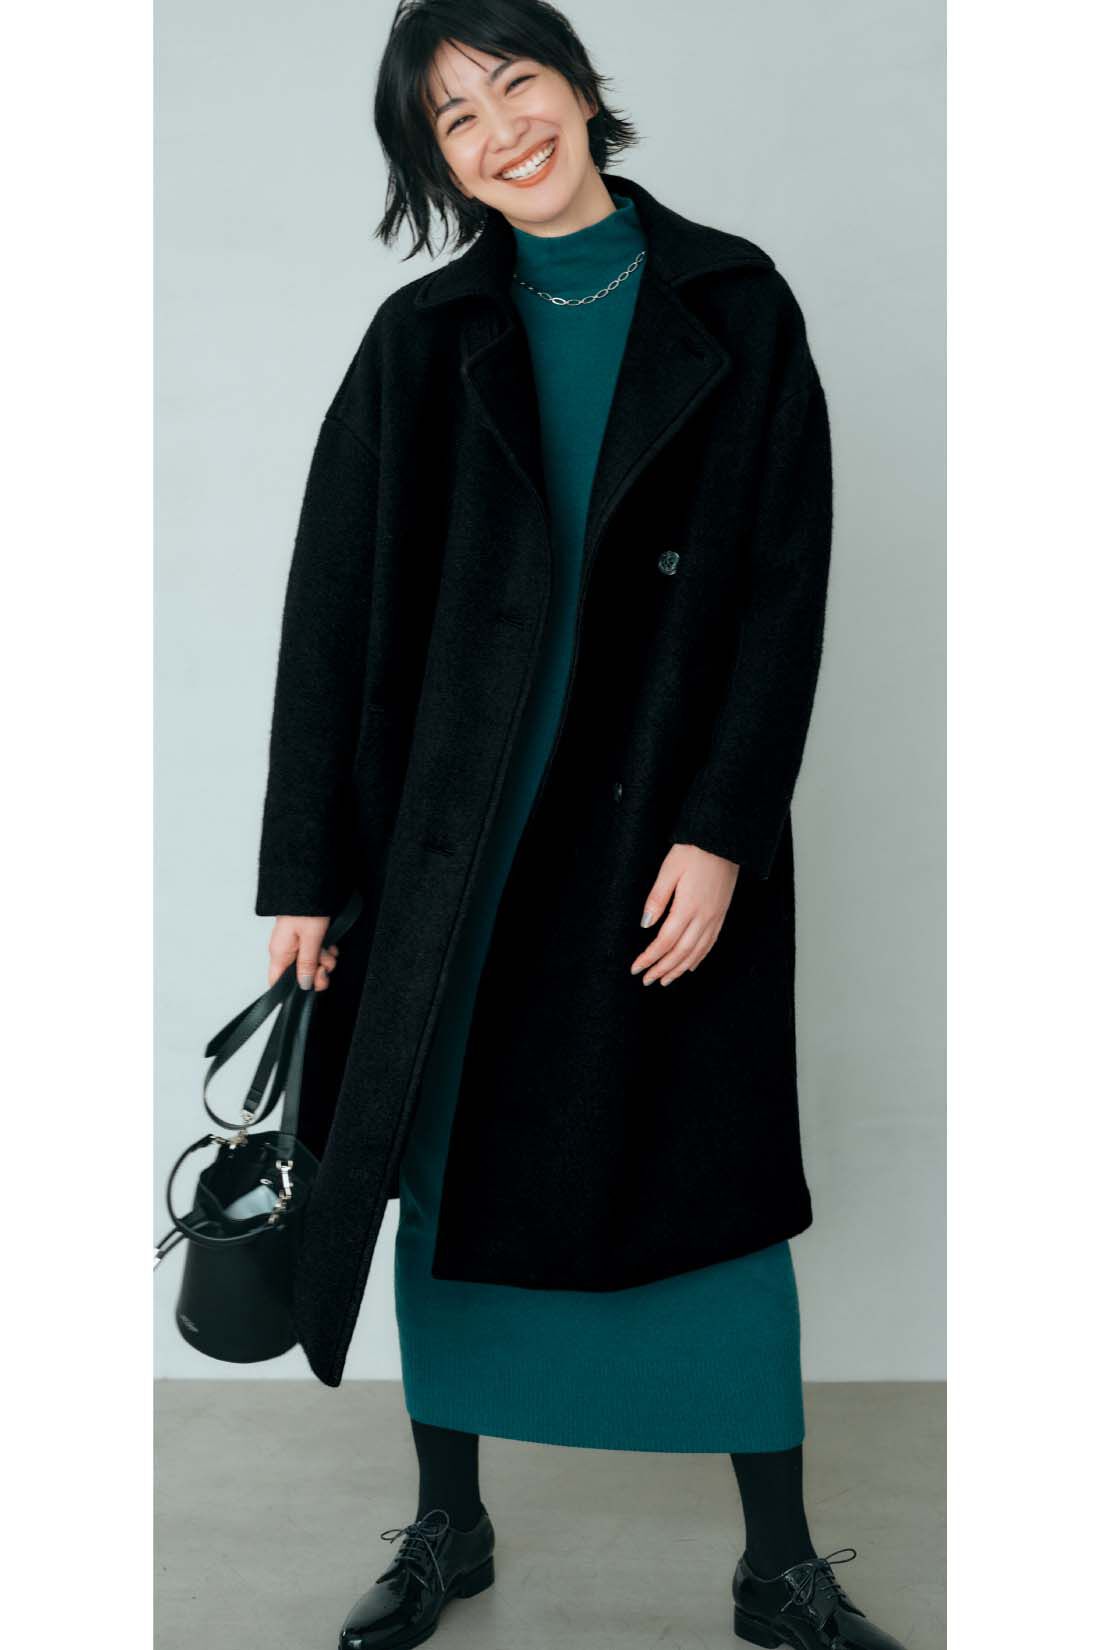 DRECO by IEDIT|IEDIT[イディット]　スライバーニット素材で軽くて暖か ゆるっと着こなす新鮮ロング丈Pコート〈ブラック〉